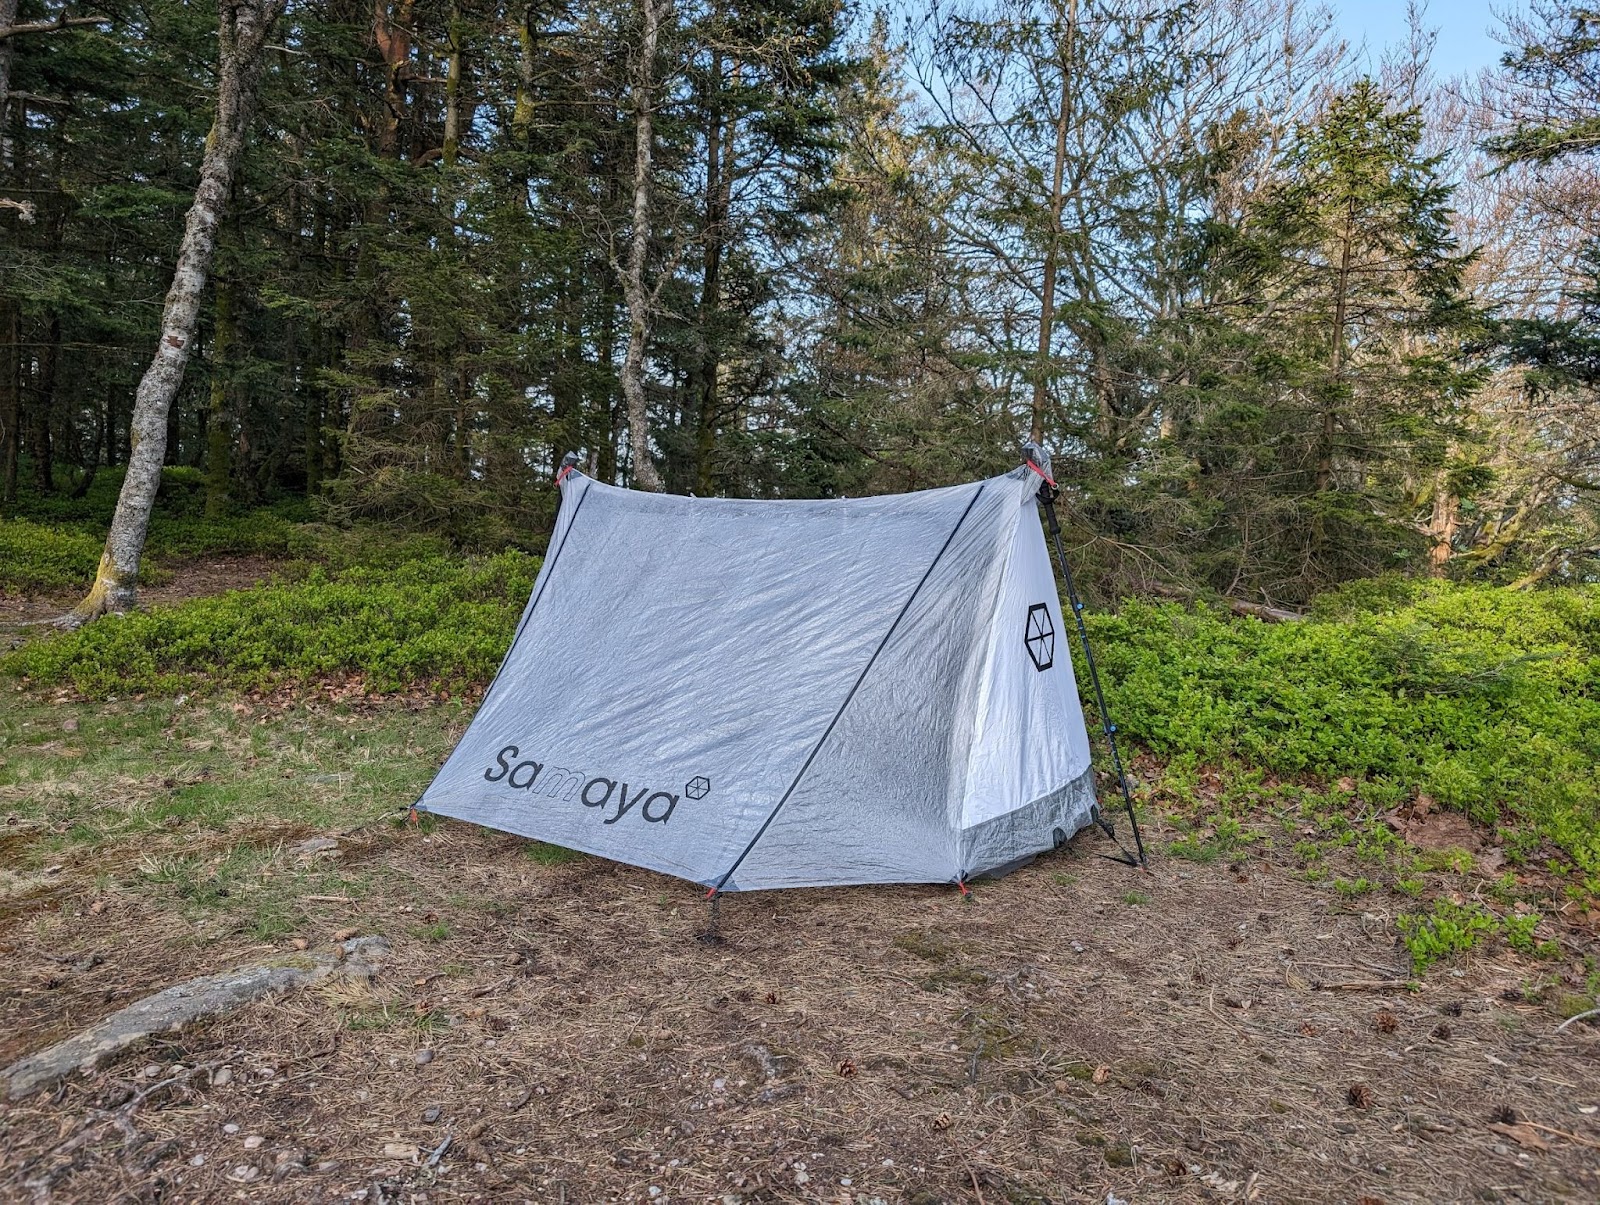 Road Trail Run: SAMAYA OPTI1.5 Ultralight Tent Review